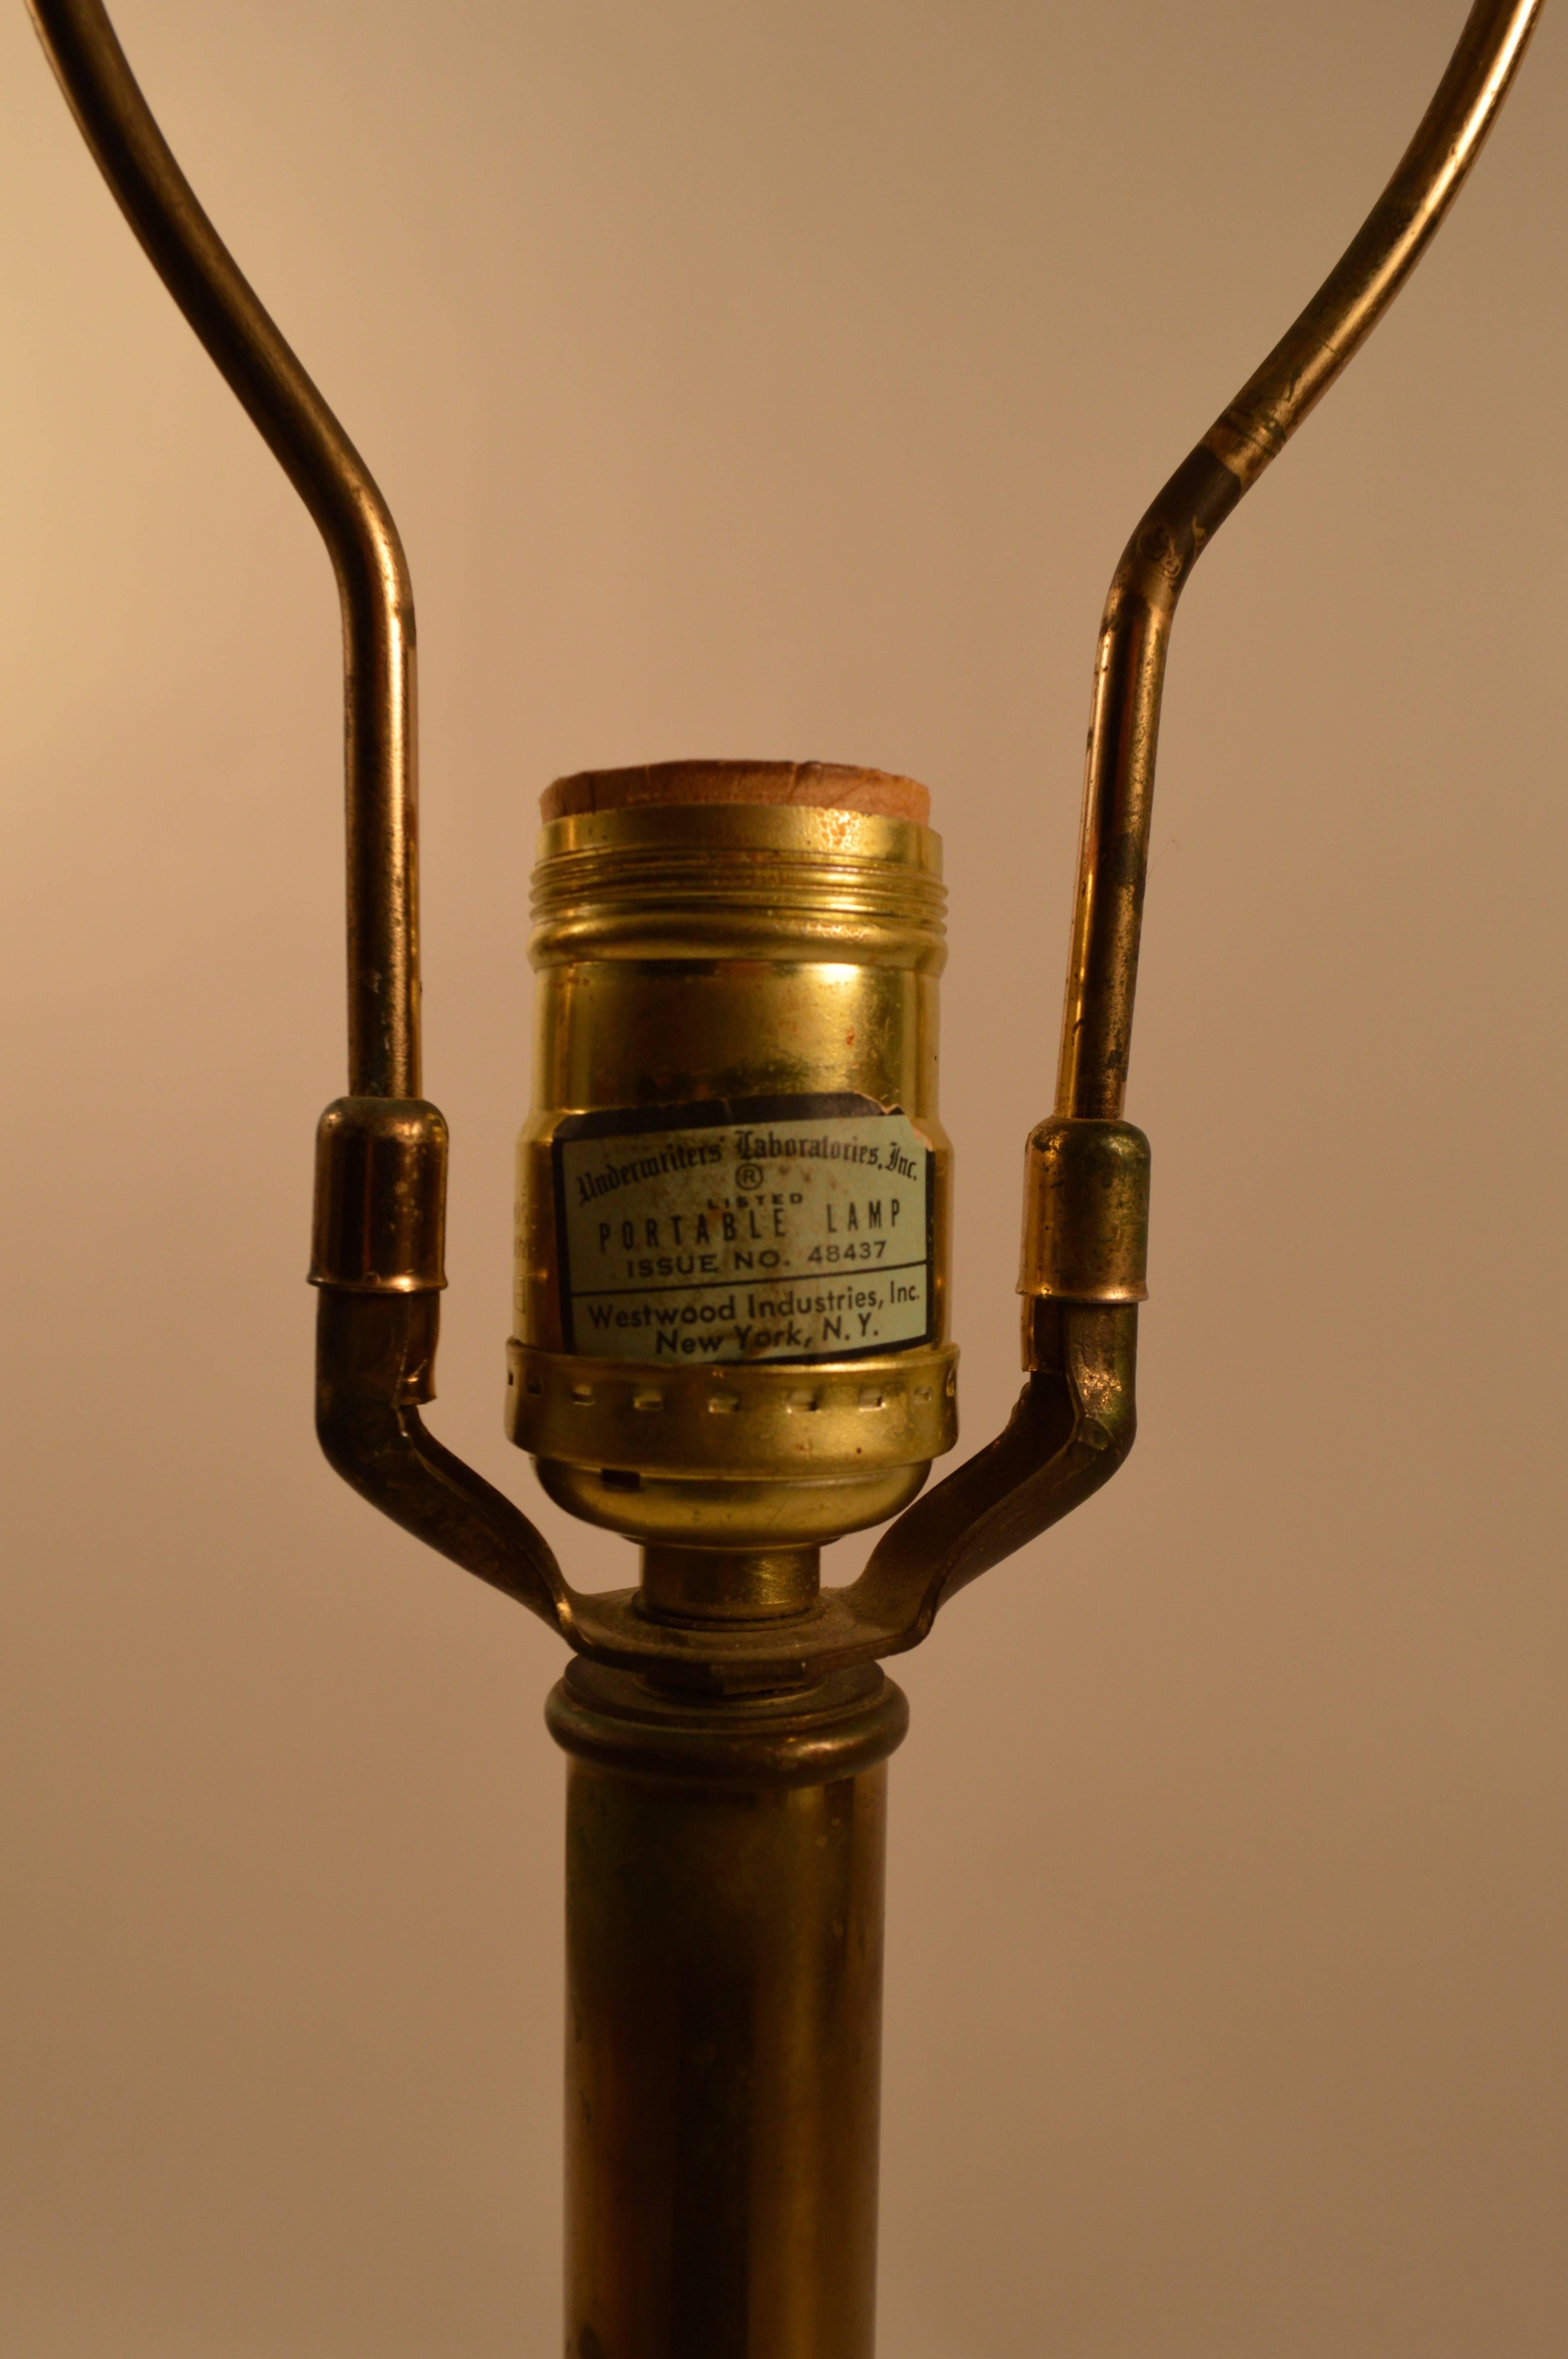 westwood industries brass lamp